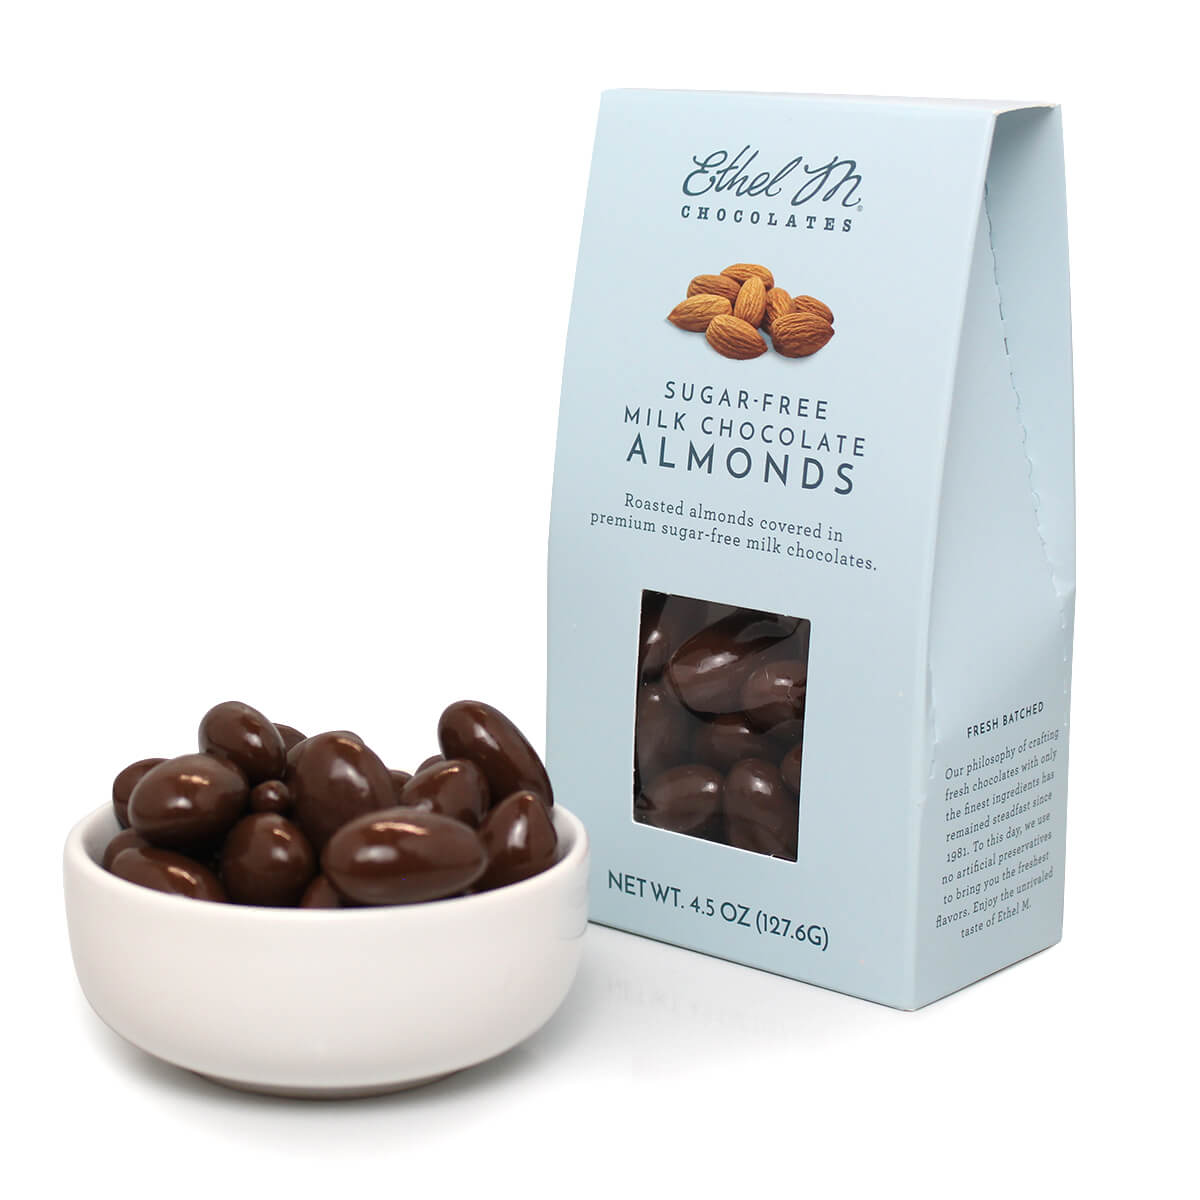 Ethel M Chocolates has something for Everyone! Enjoy this Sugar-free dipped Almonds, Cashews with Sugar-free Caramels.